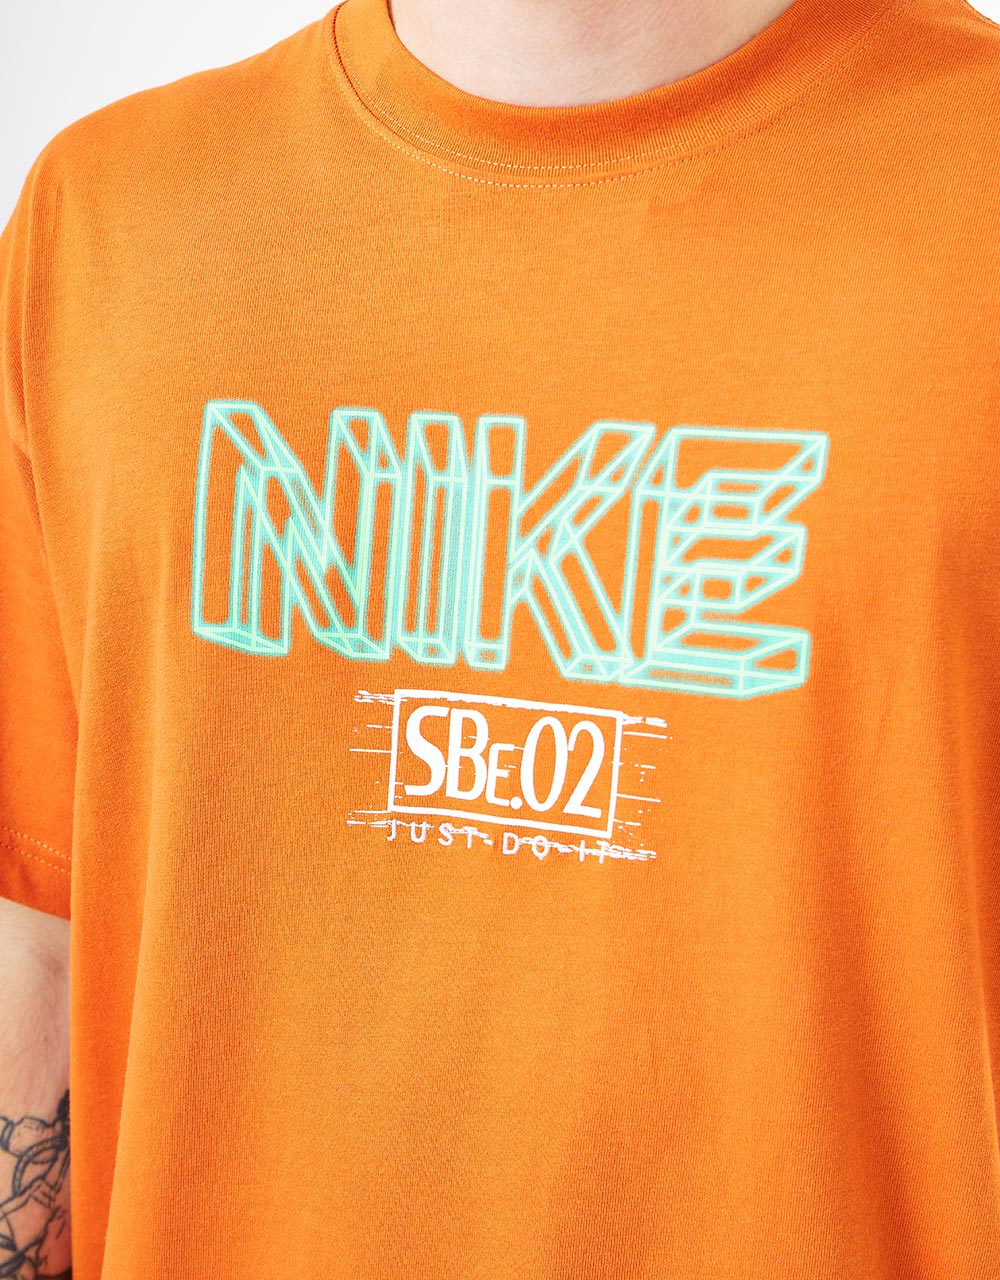 Nike SB Video T-Shirt - Campfire Orange